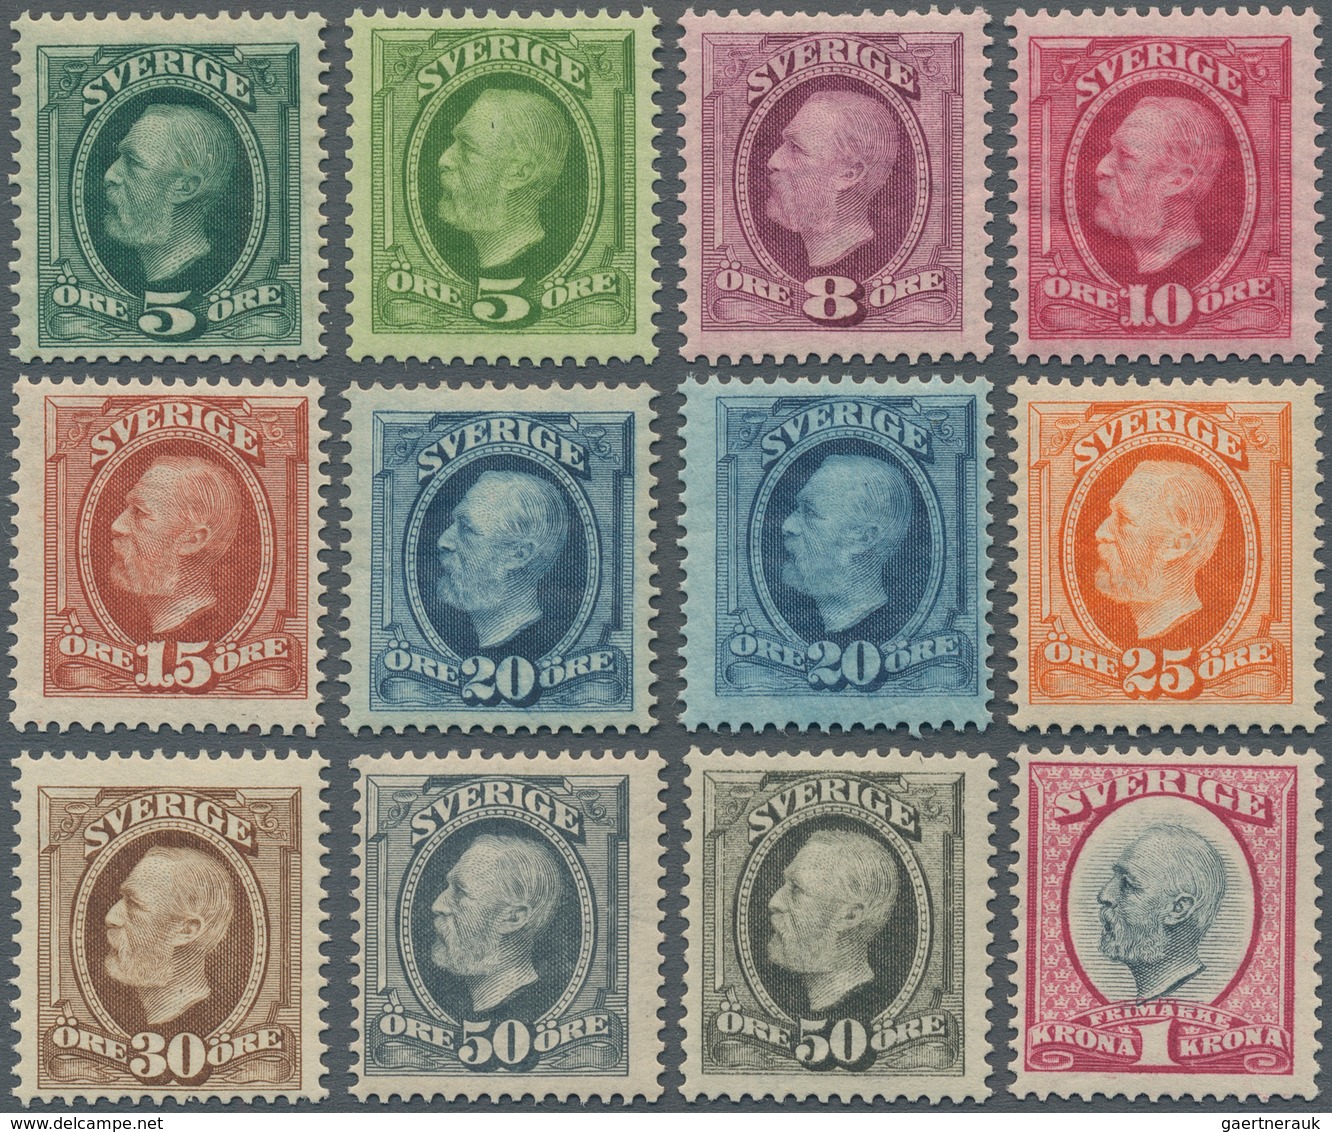 Schweden: 1891/1900, Oscar II. Definitives Set Of 12 Incl. Two Shades Of 5öre, 20öre And 50öre, Mint - Used Stamps